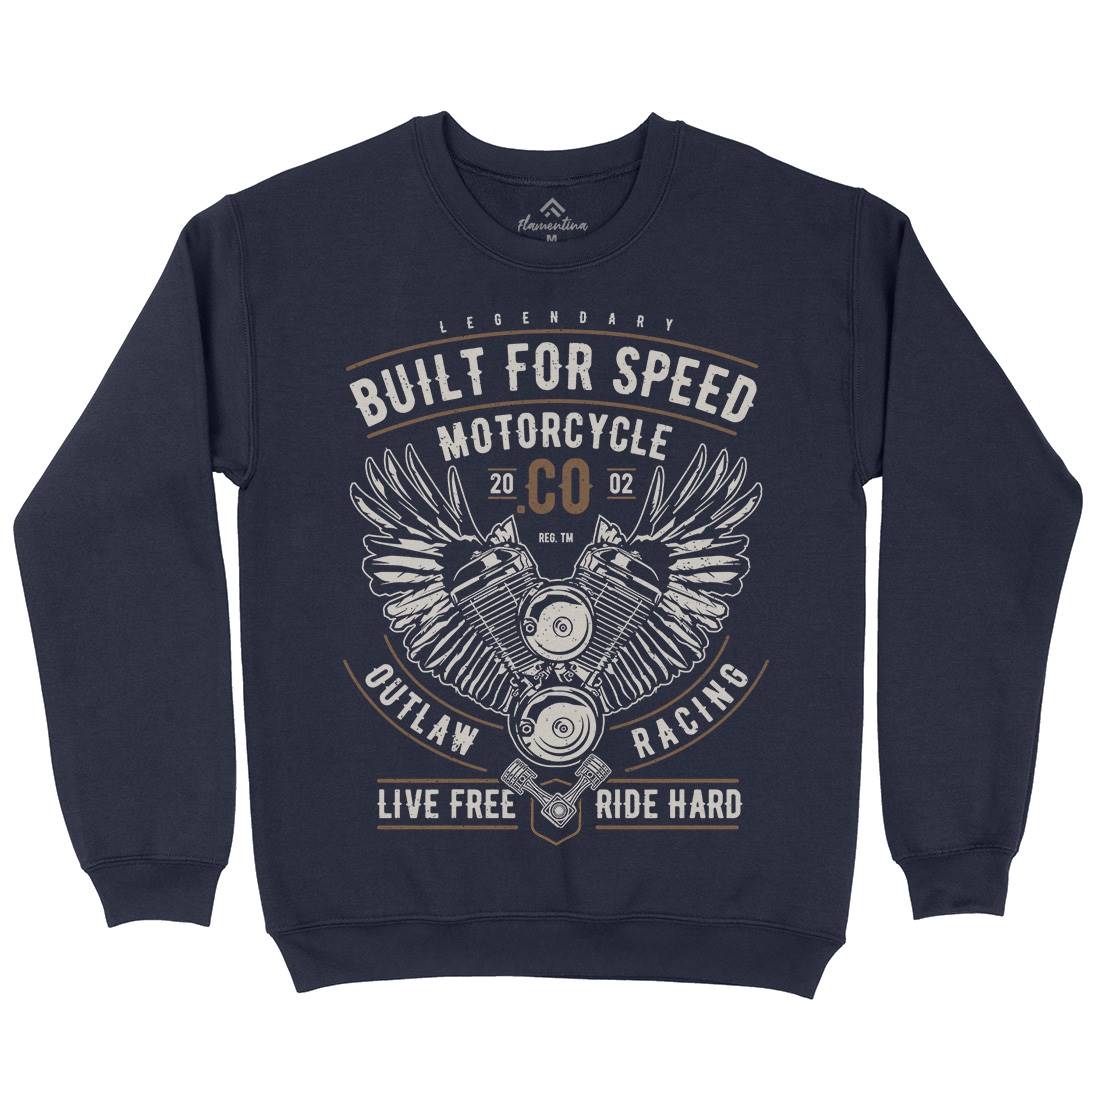 Built For Speed Kids Crew Neck Sweatshirt Motorcycles A628